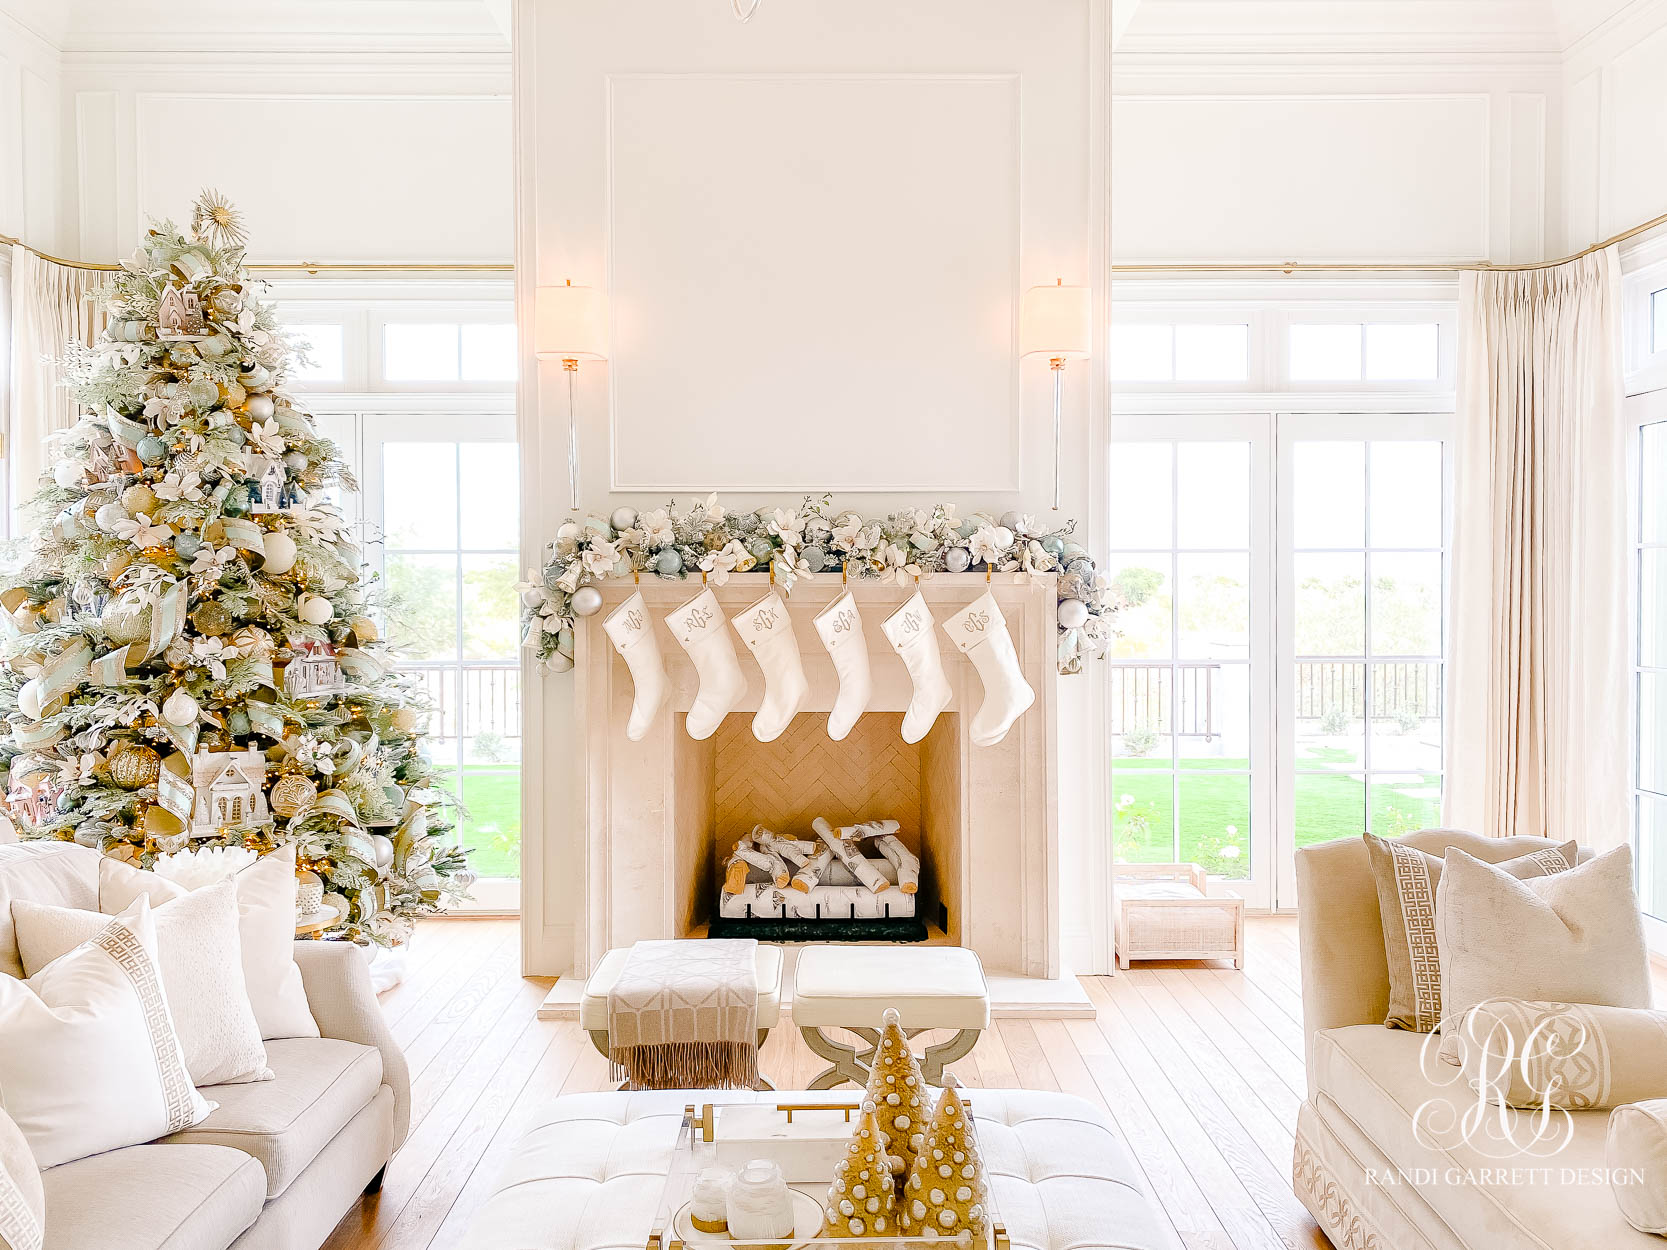 I'll be Home for Christmas Home Tour - Family Room Christmas fireplace